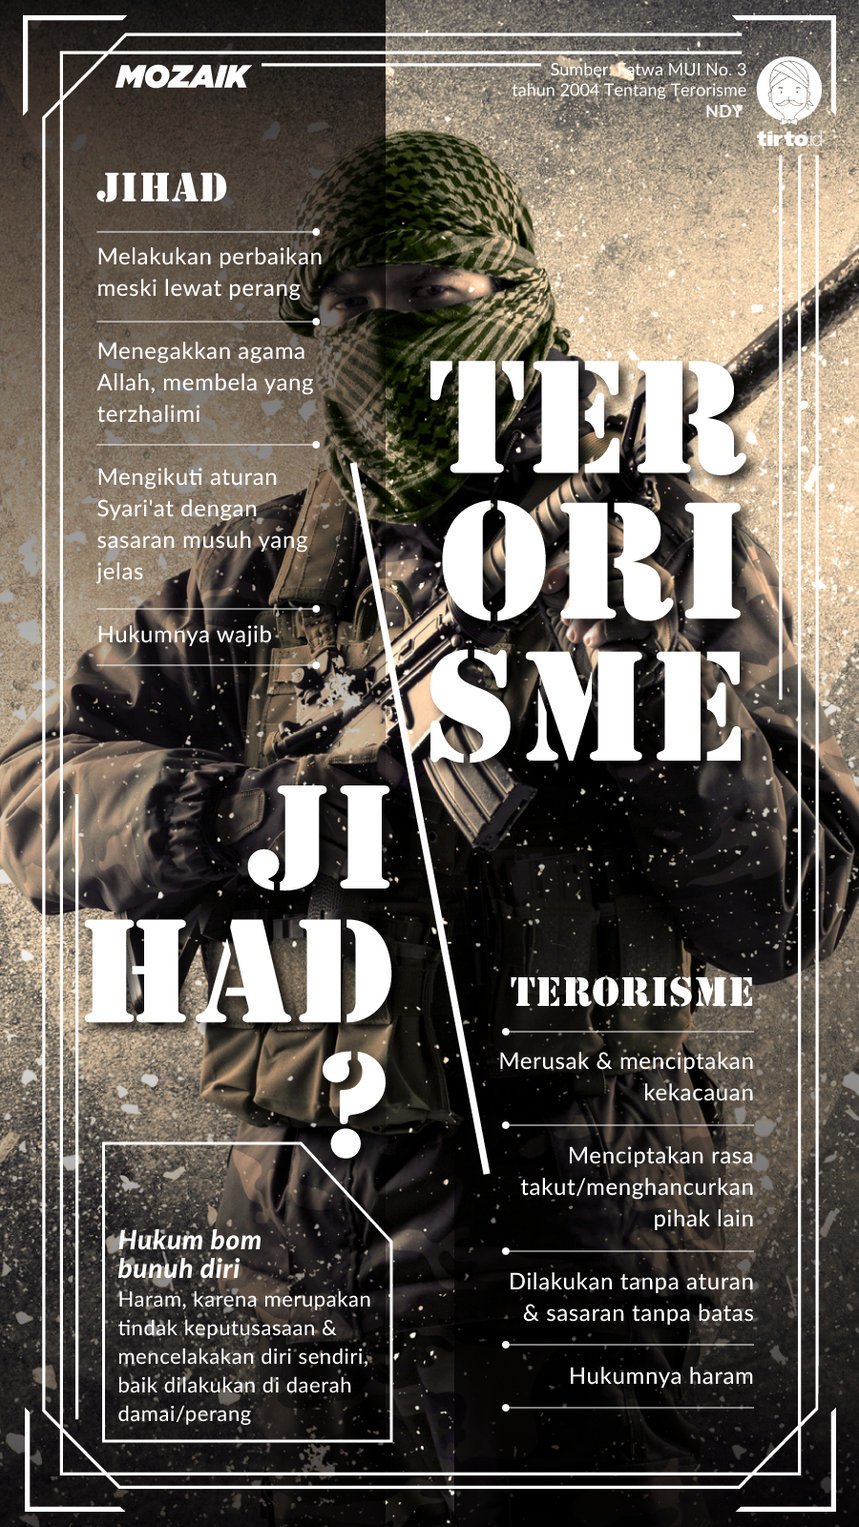 Infografik Mozaik Terorisme Jihad